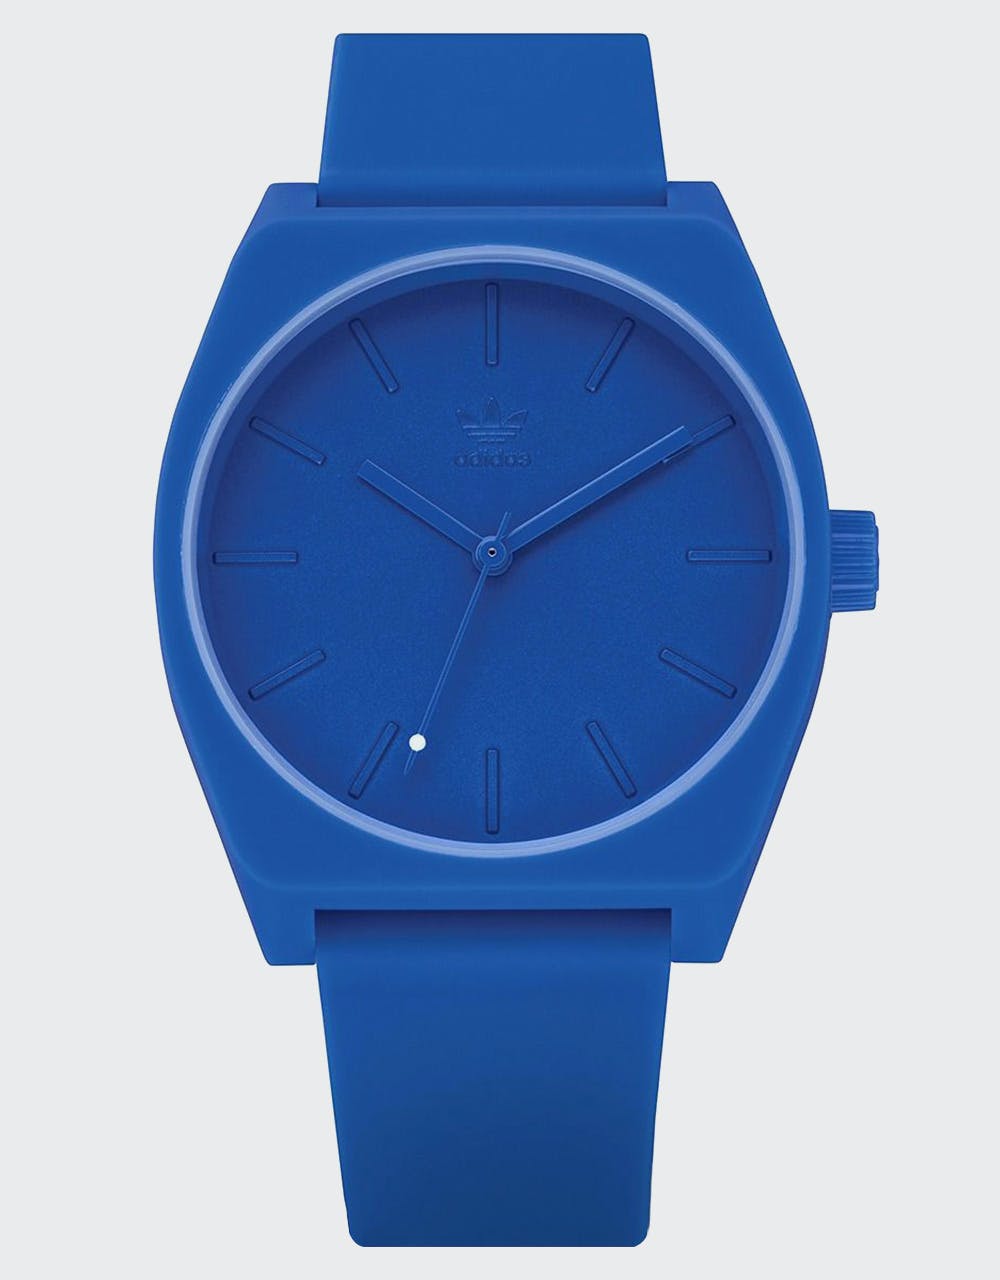 Adidas Process SP1 Watch - All Blue